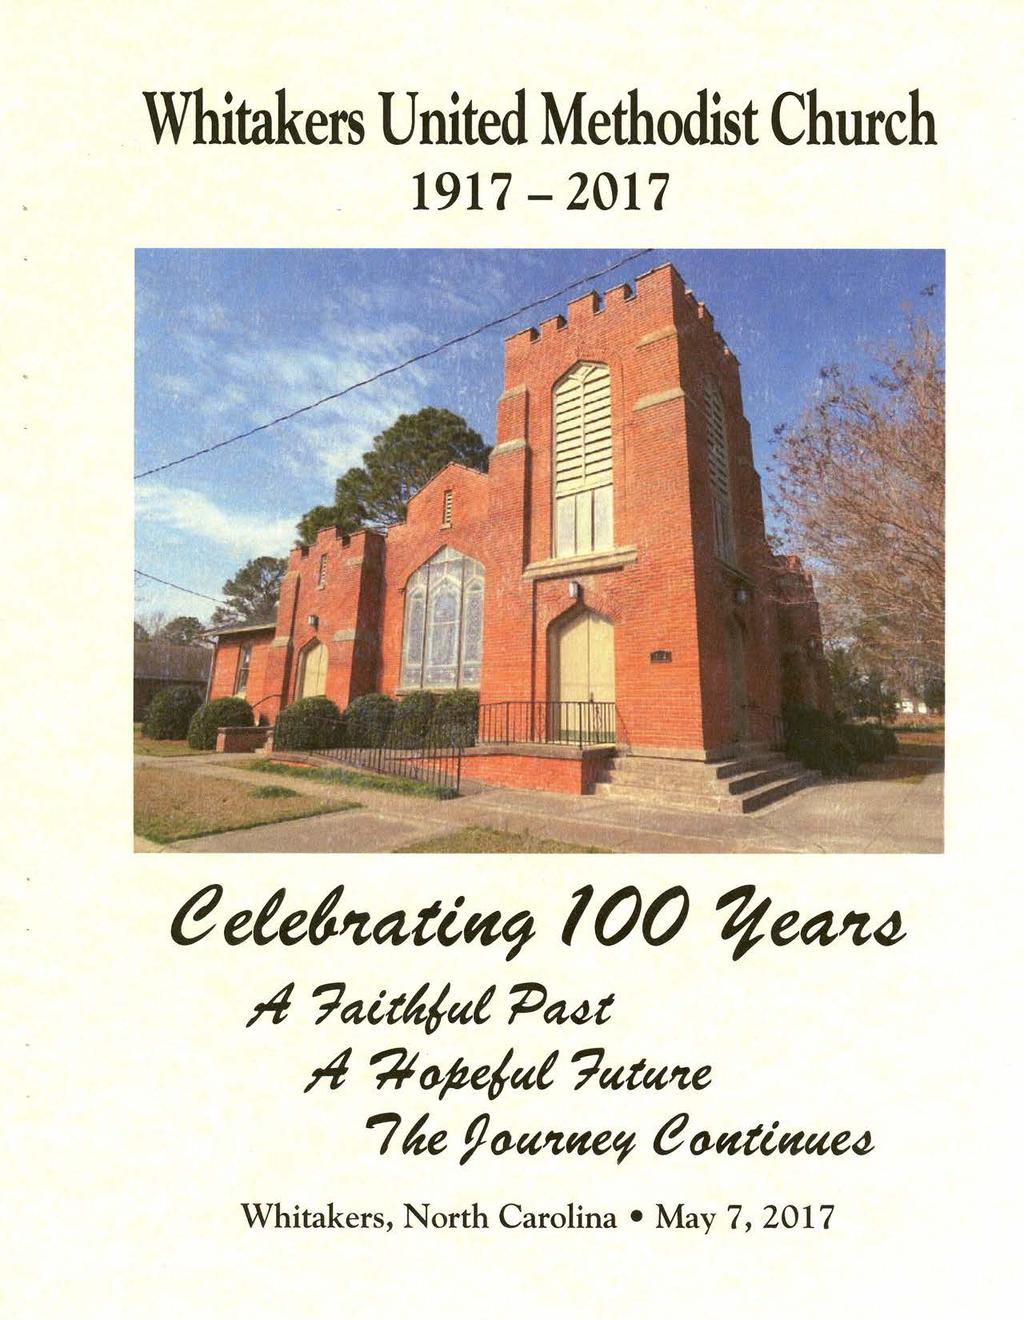 Whitakers United Methodist Church 1917-2017 eeted.